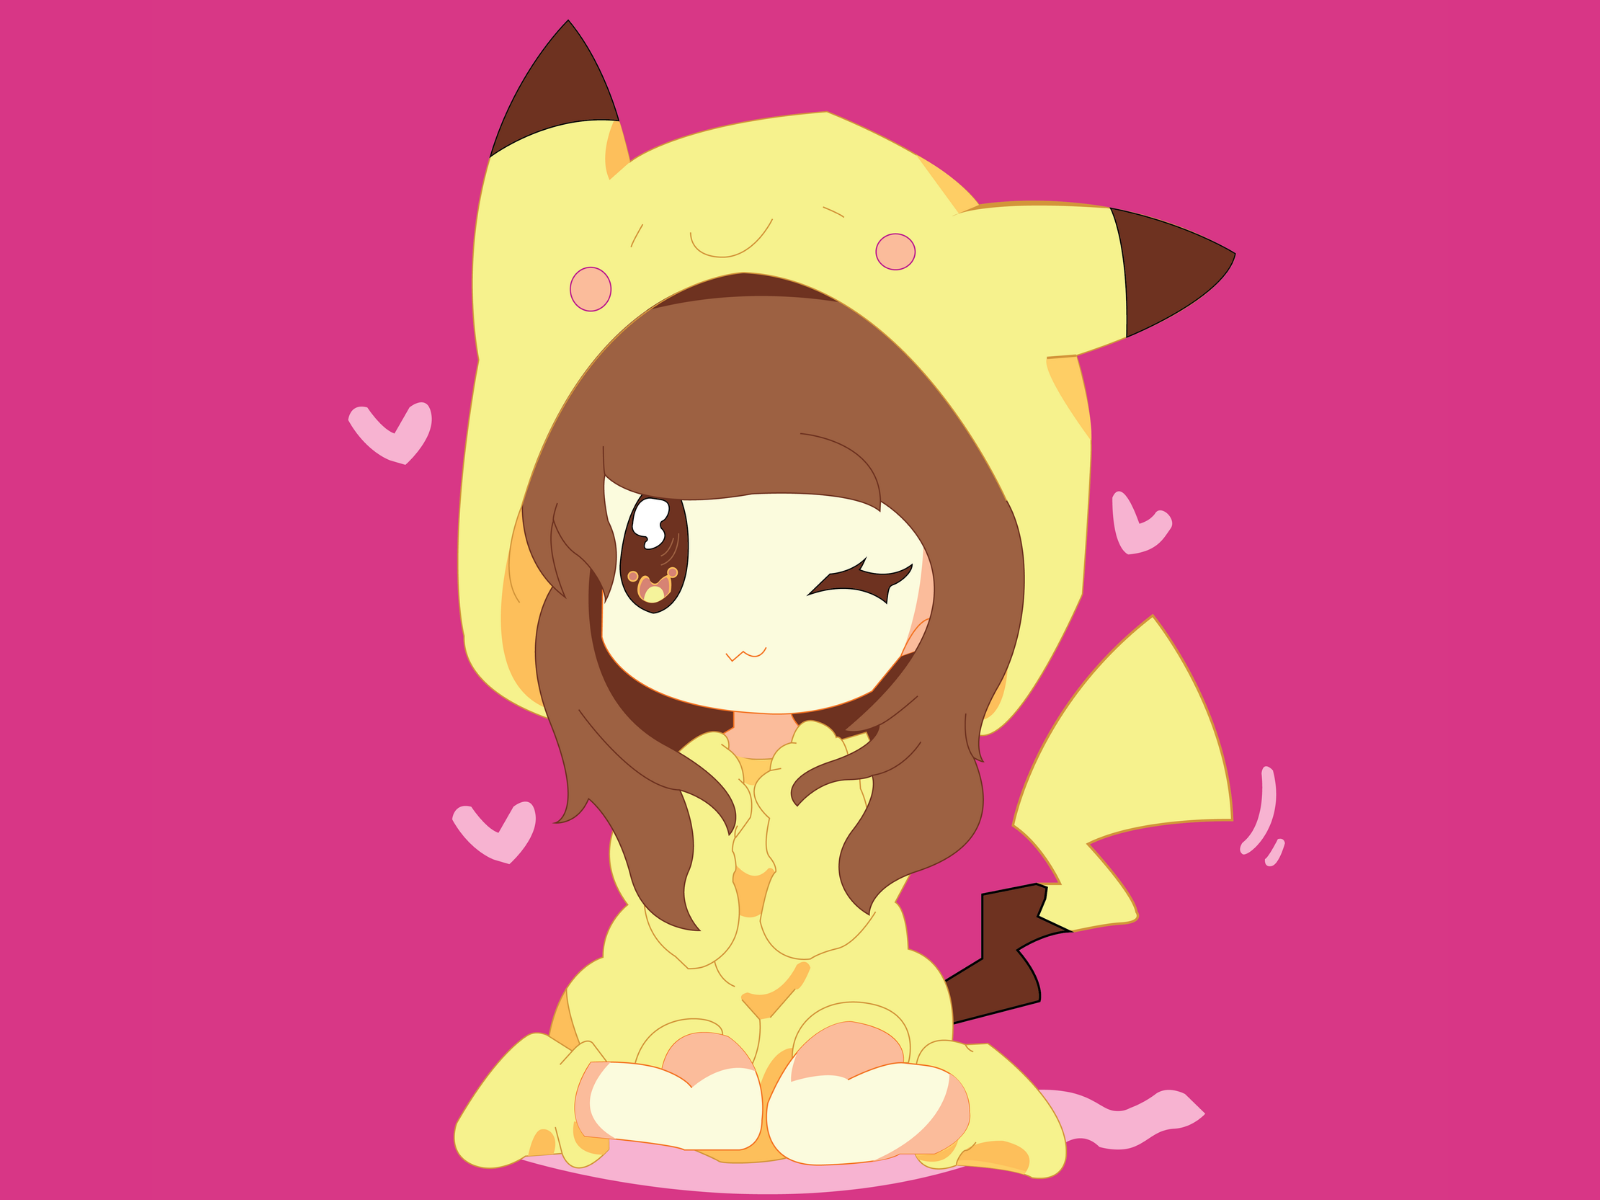 Pikachu anime girl by Dhruv Bisht on Dribbble